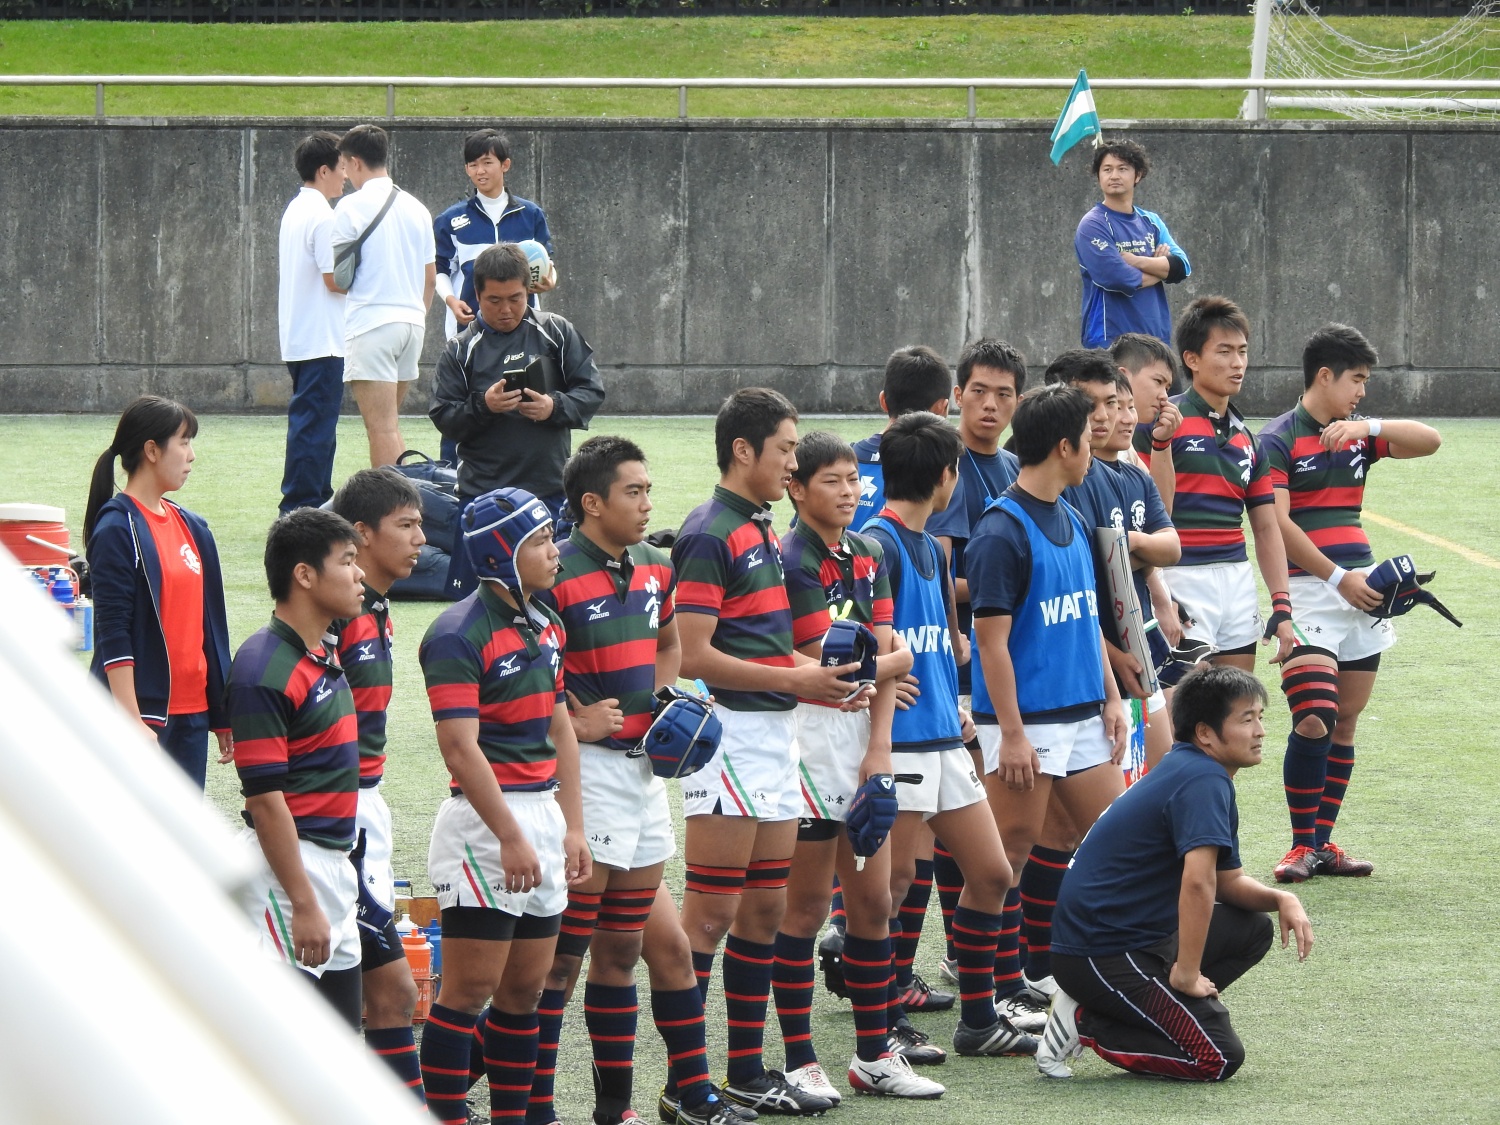 http://kokura-rugby.sakura.ne.jp/DSCN8208_xlarge.JPG